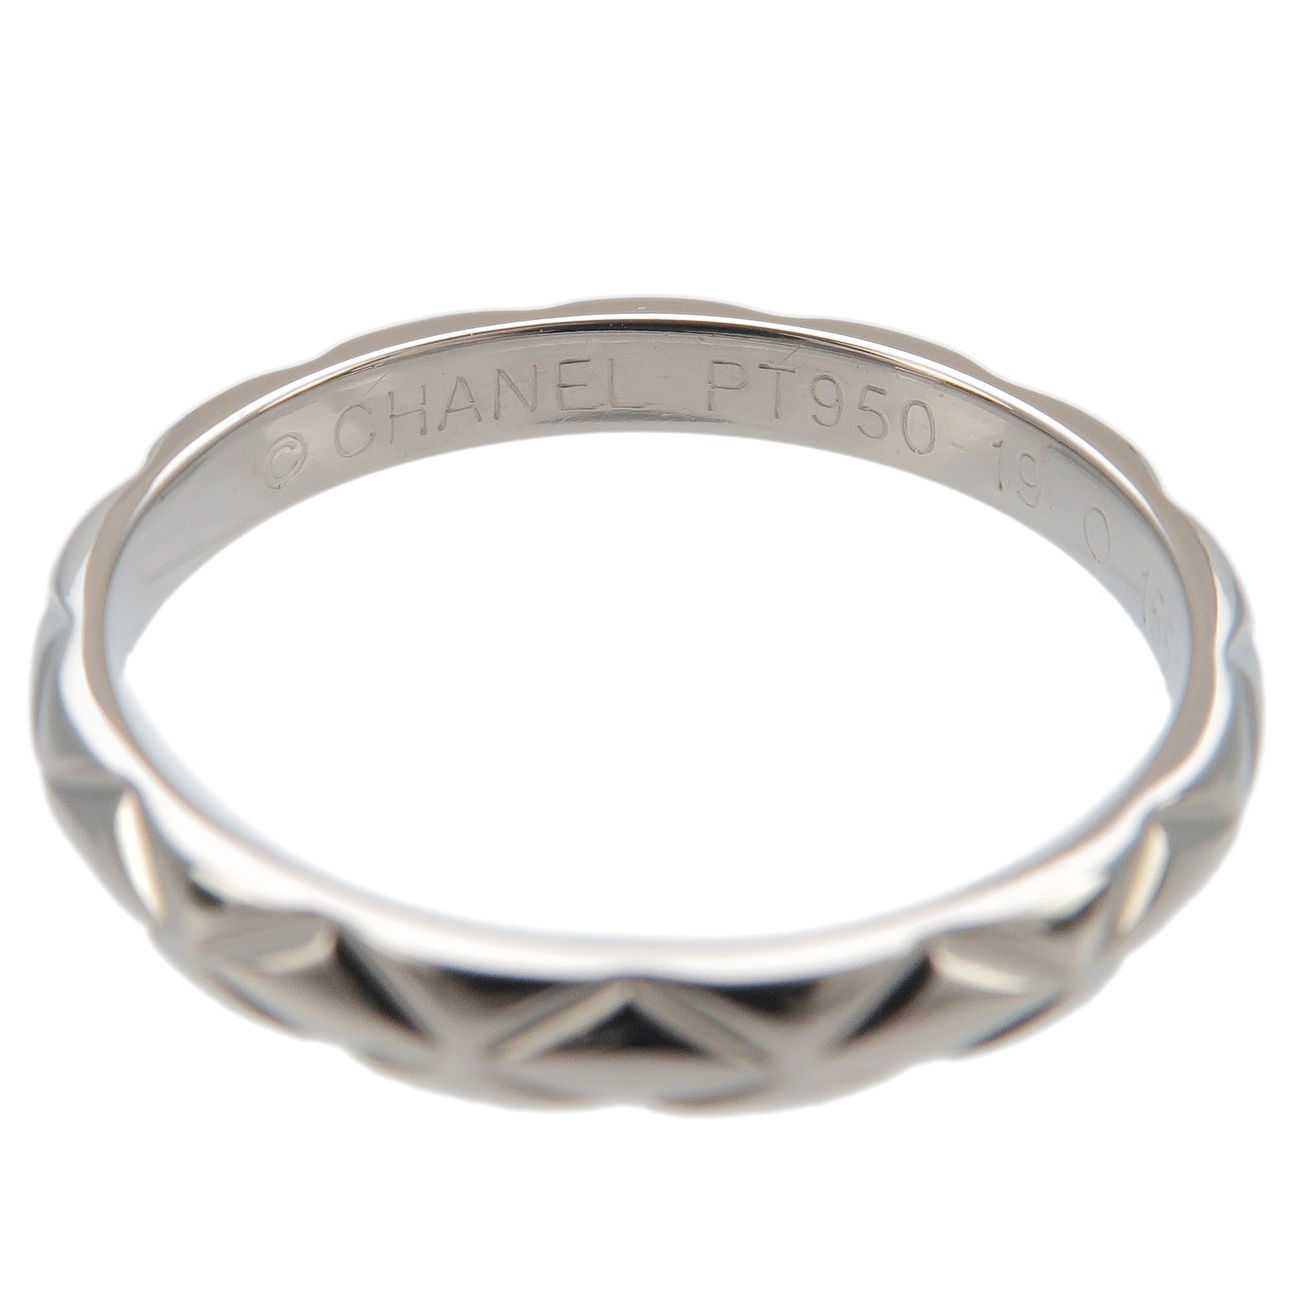 CHANEL Matelasse Ring Small PT950 Platinum #50 US11 EU49.5